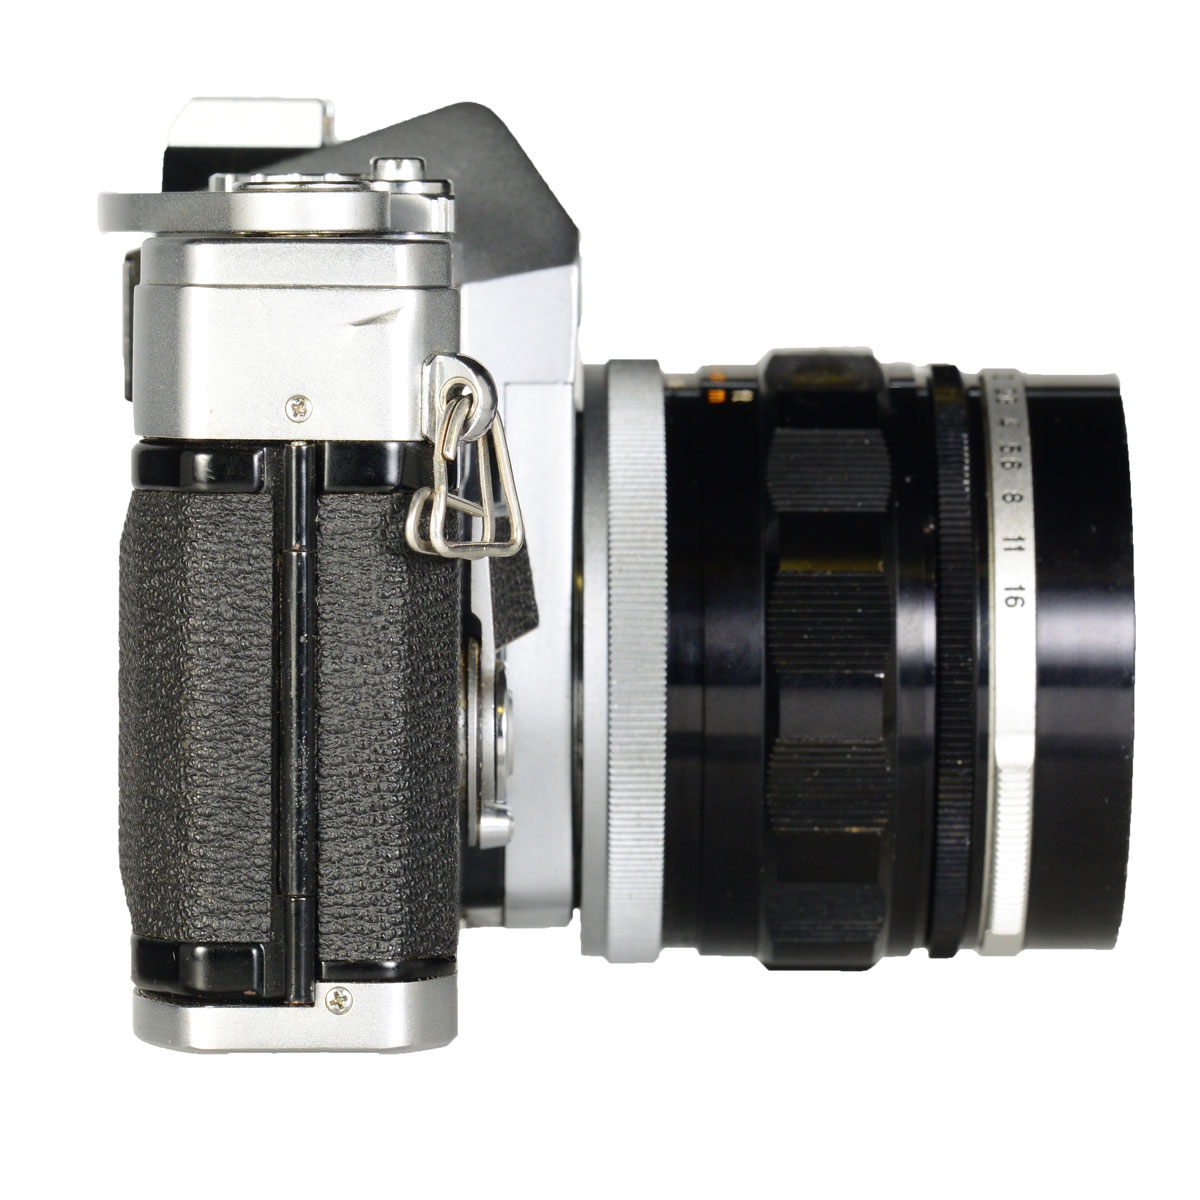 Canon Pellix QL (bay. FD) б/у